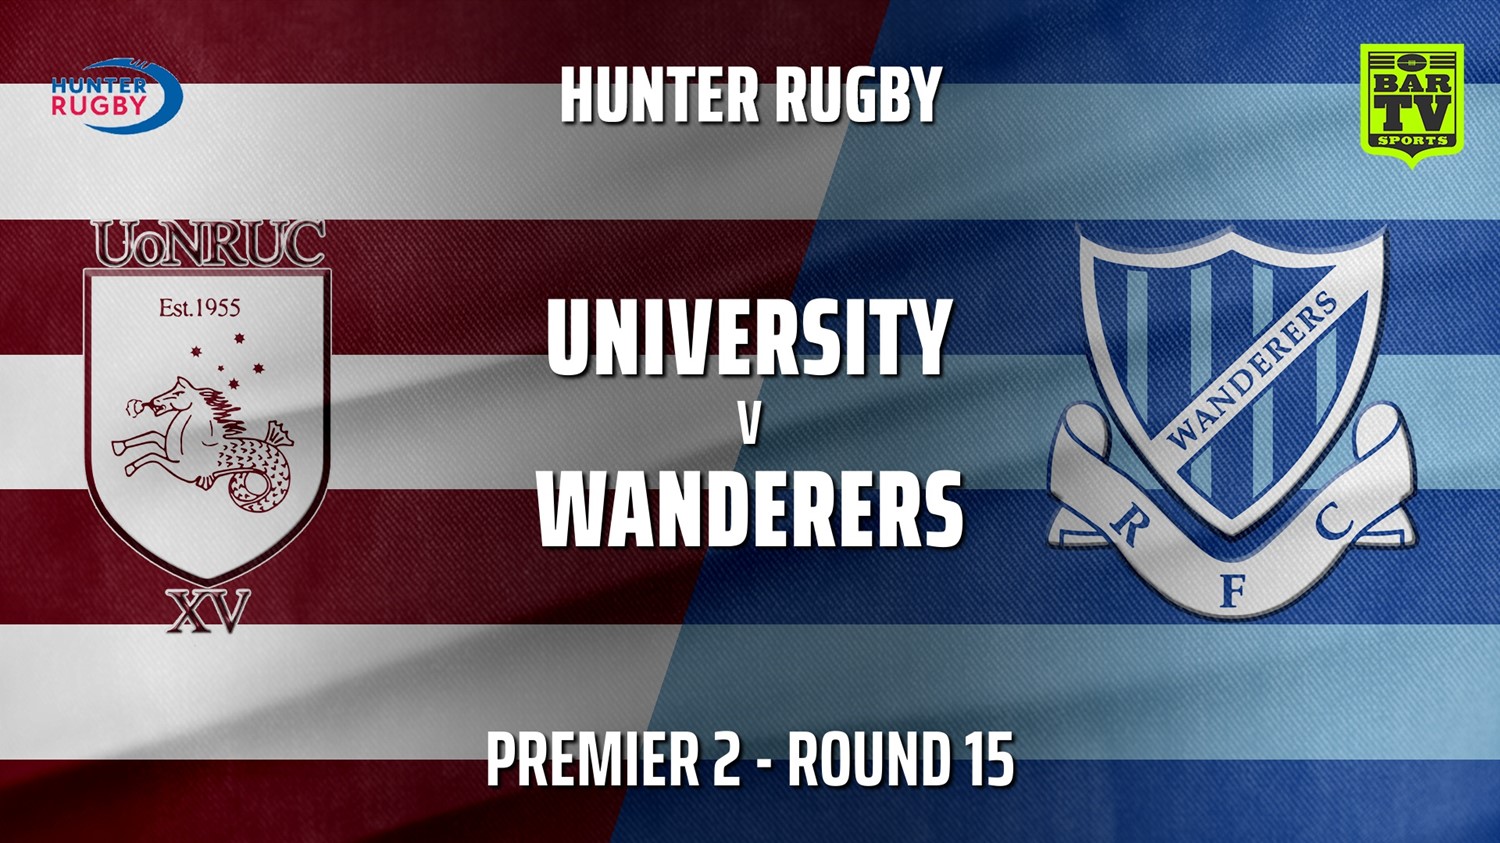 210731-Hunter Rugby Round 15 - Premier 2 - University Of Newcastle v Wanderers Minigame Slate Image